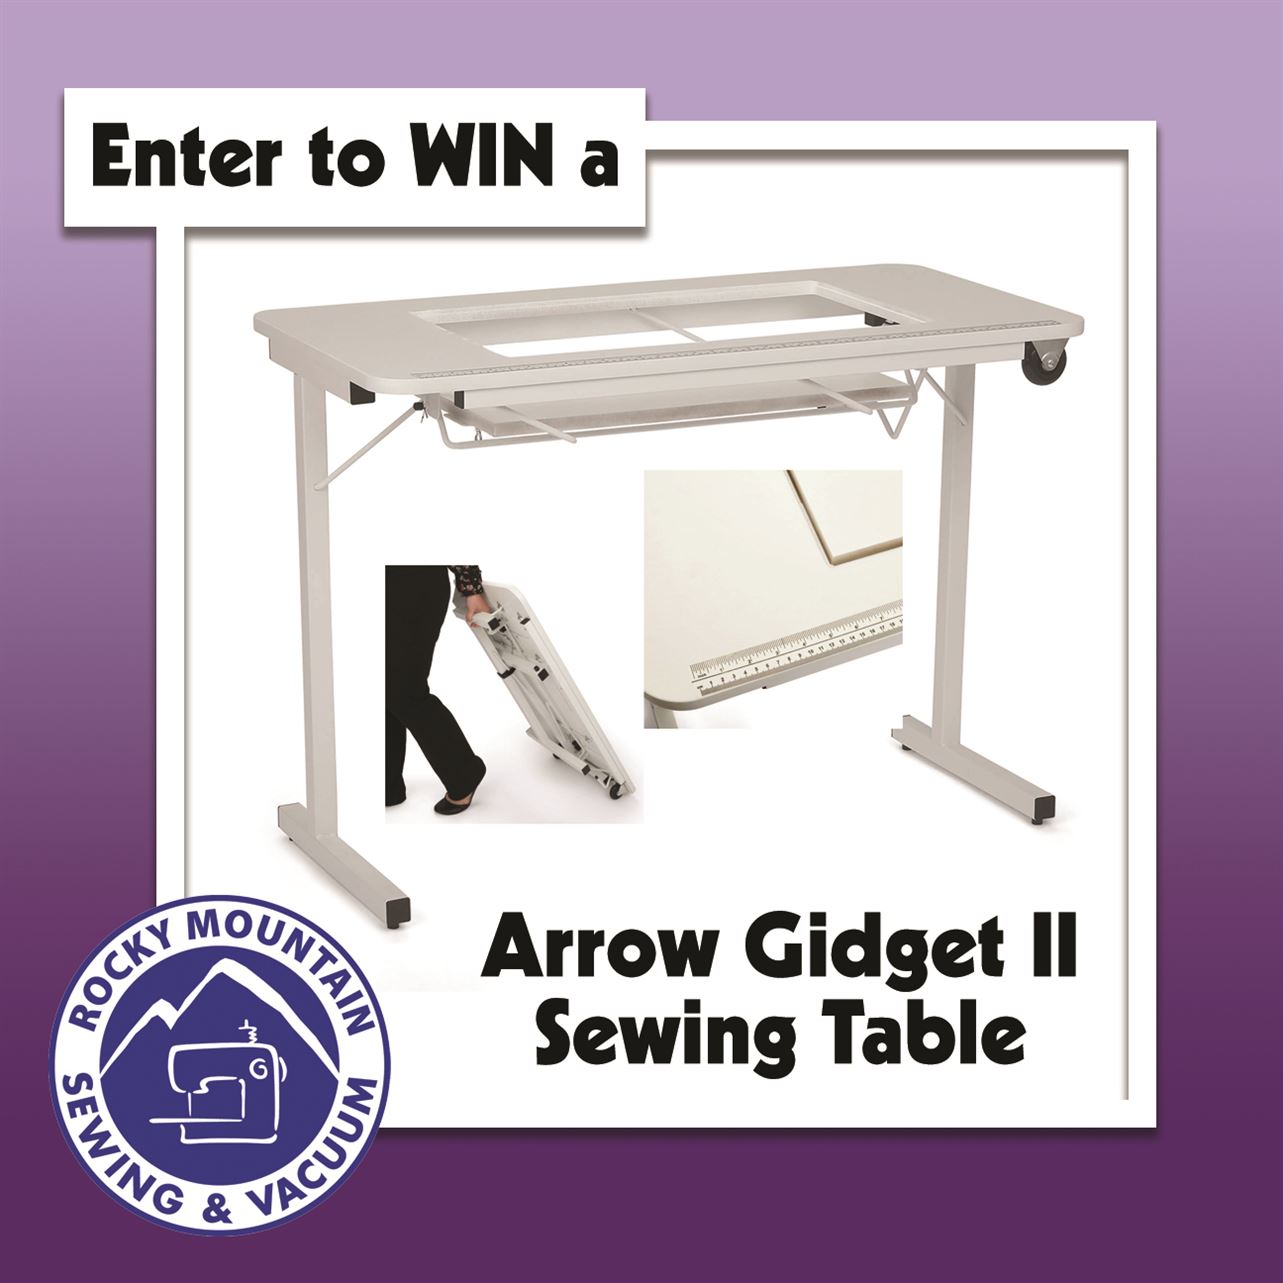 win-an-arrow-gidget-ii-sewing-table-rocky-mountain-sewing-vacuum